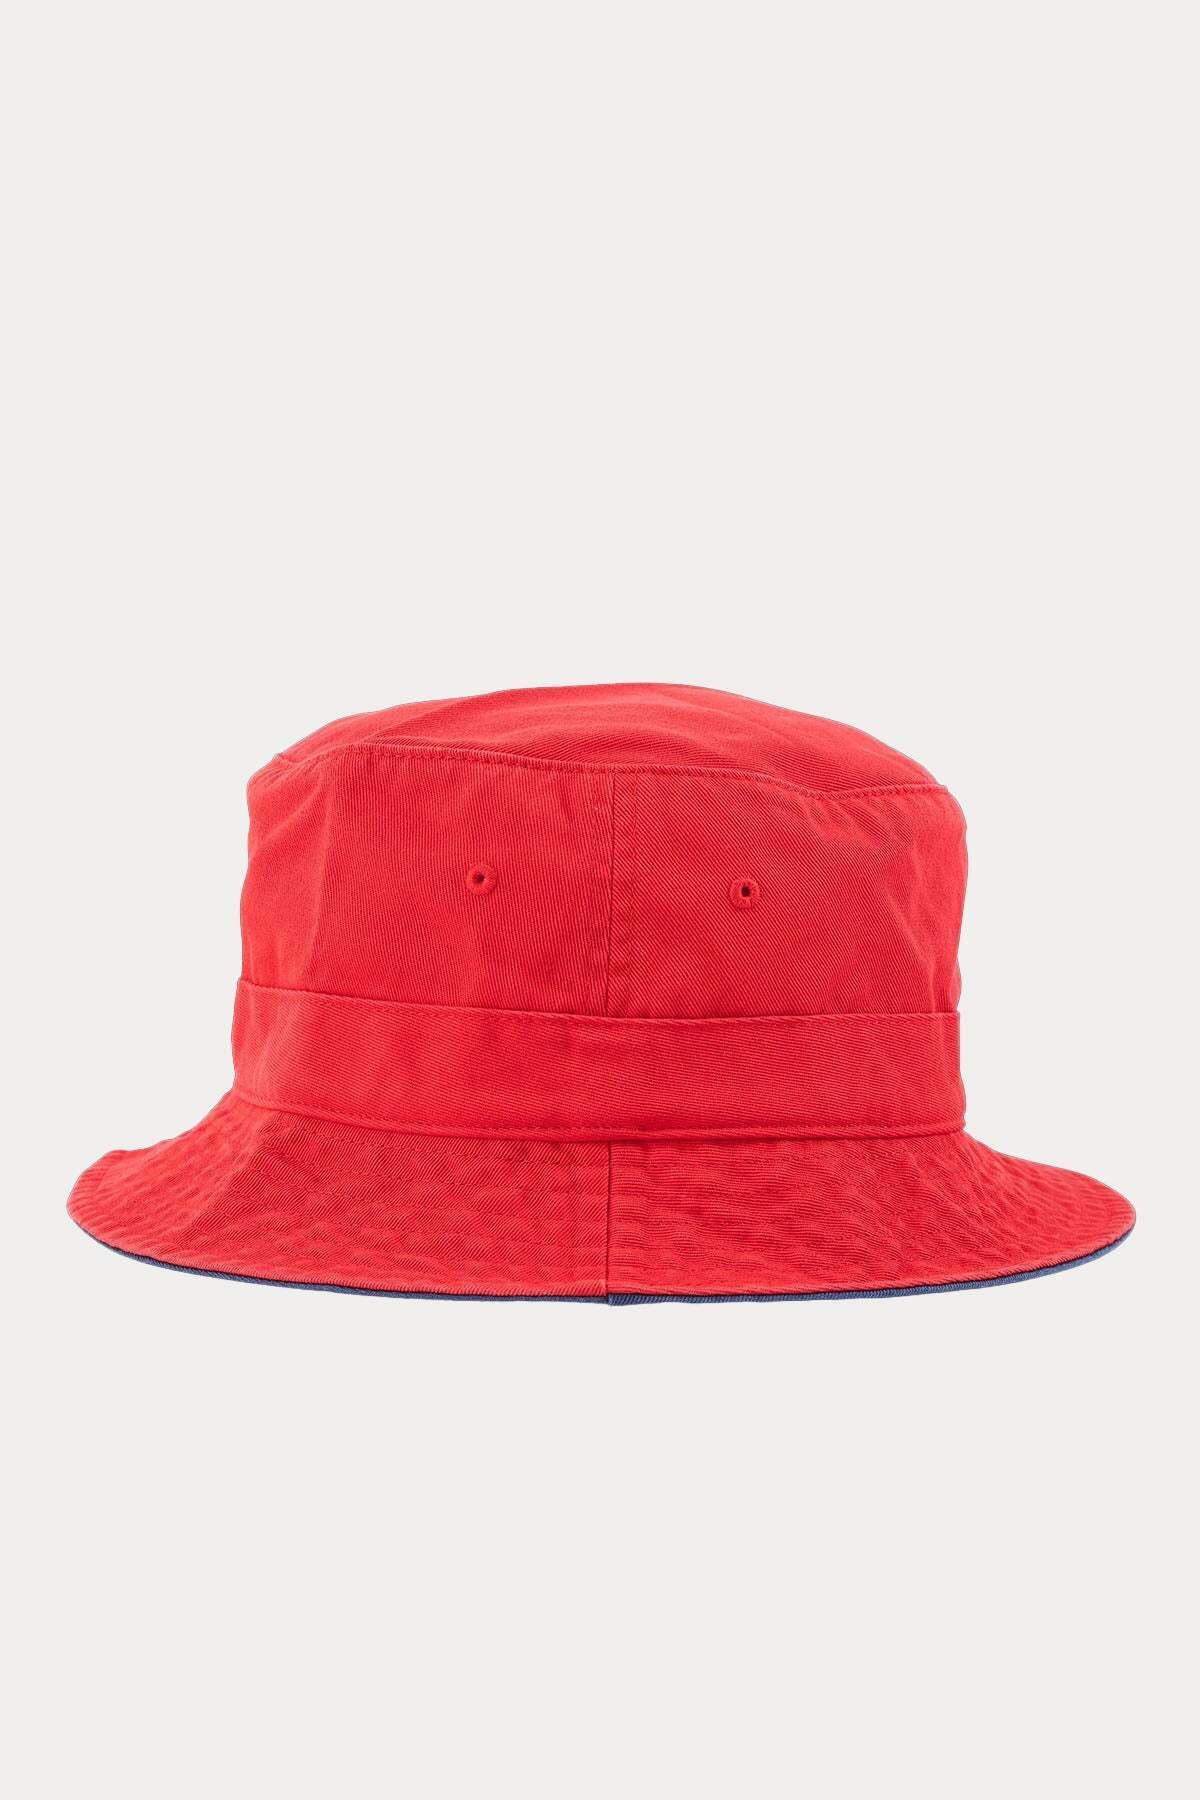 Ralph Lauren کلاه خرس چوگان l / xl قرمز